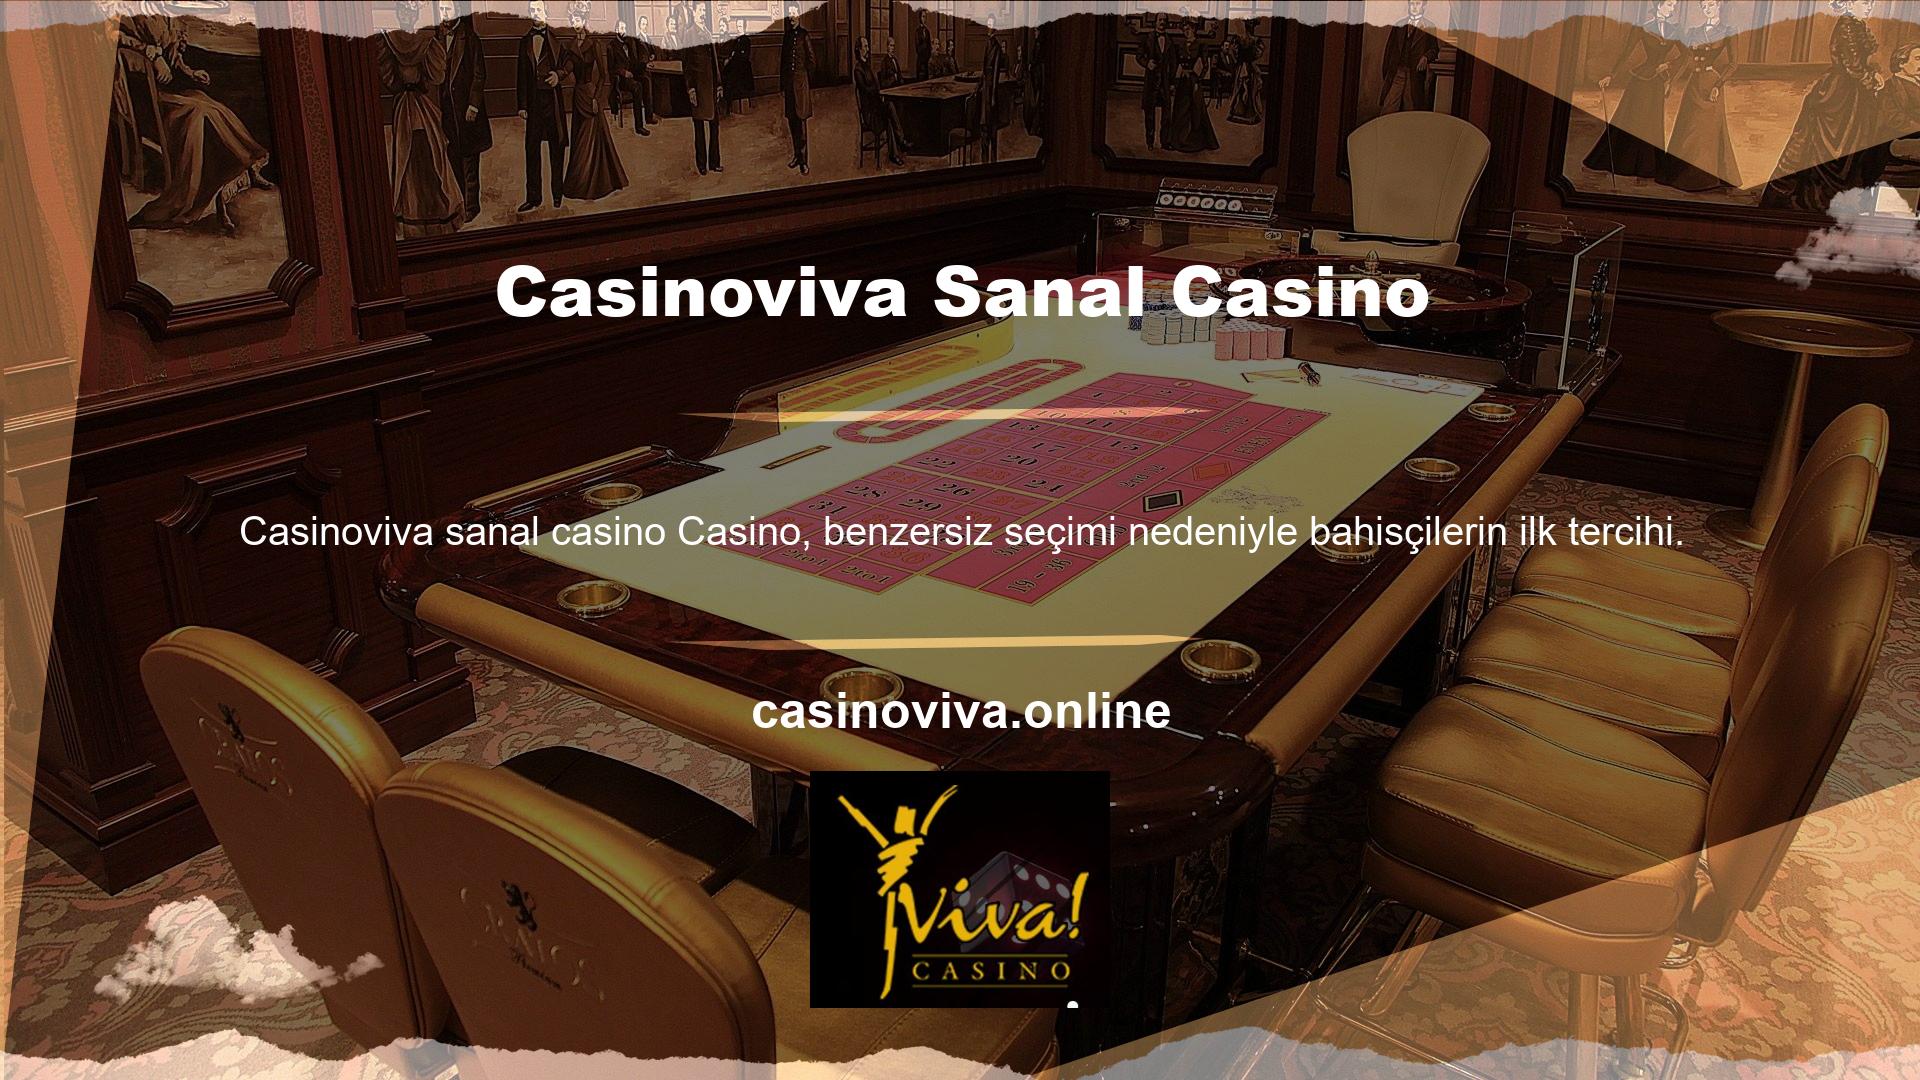 Casinoviva Sanal Casino